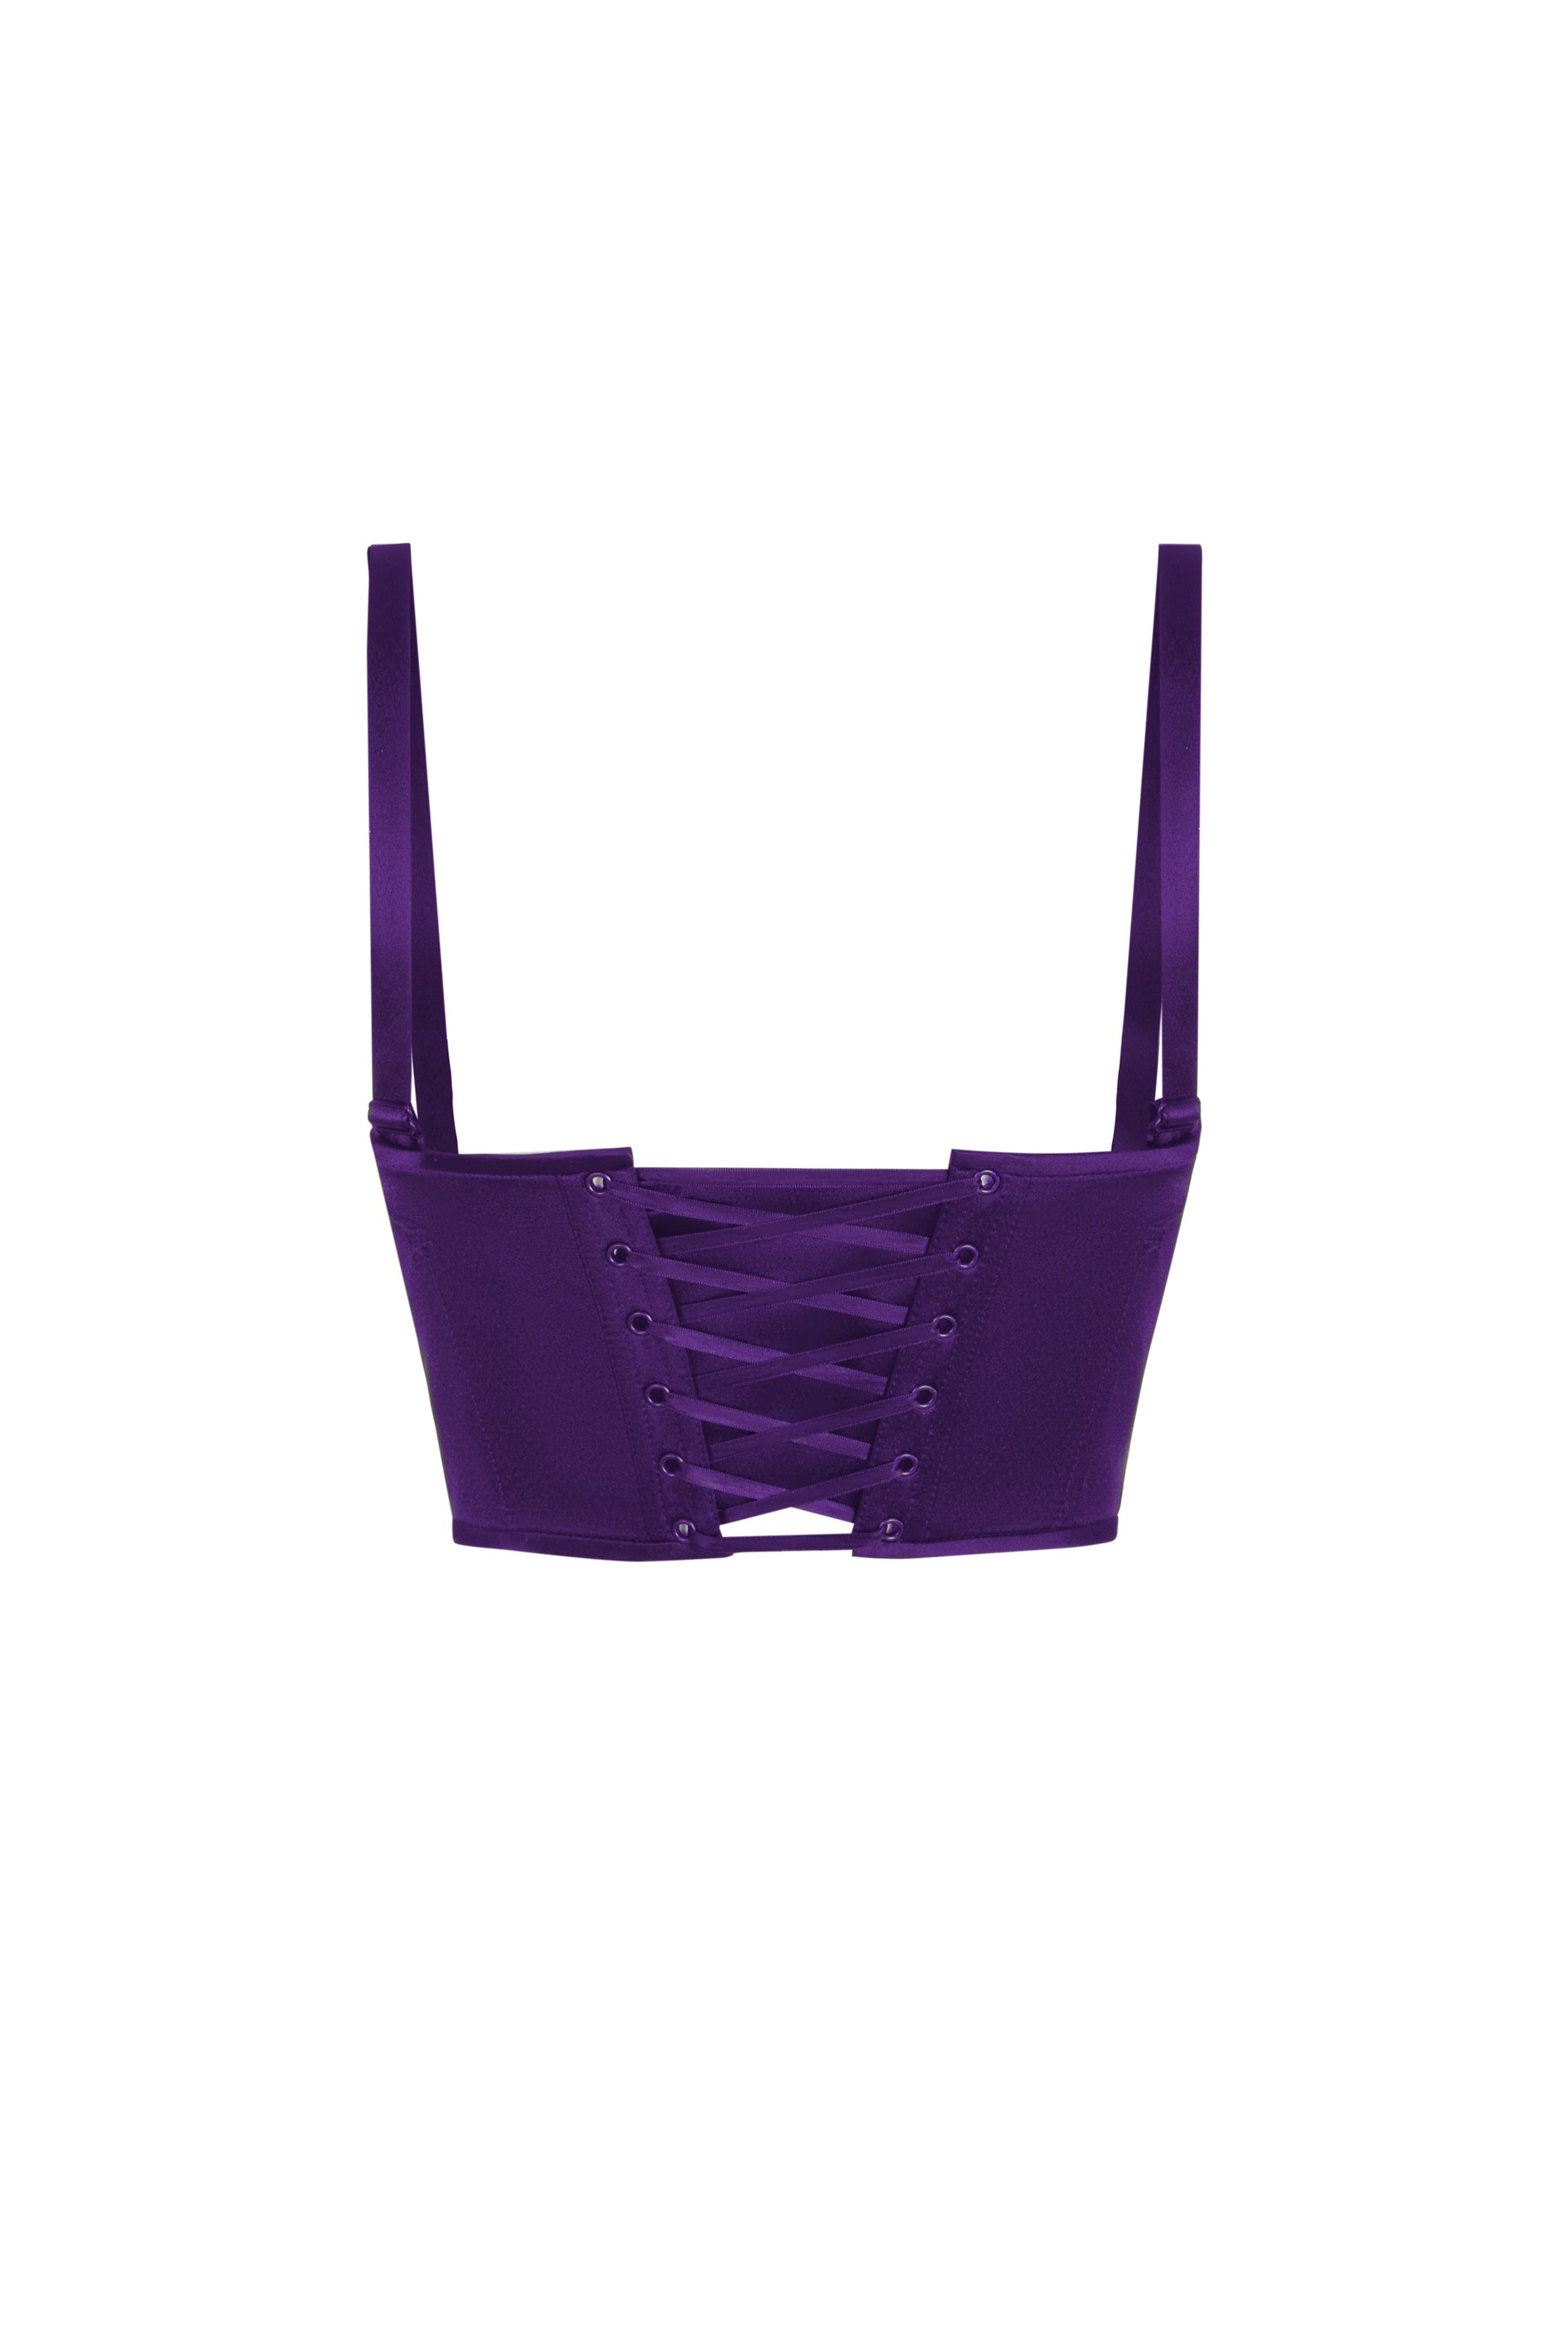 Purple satin top corset